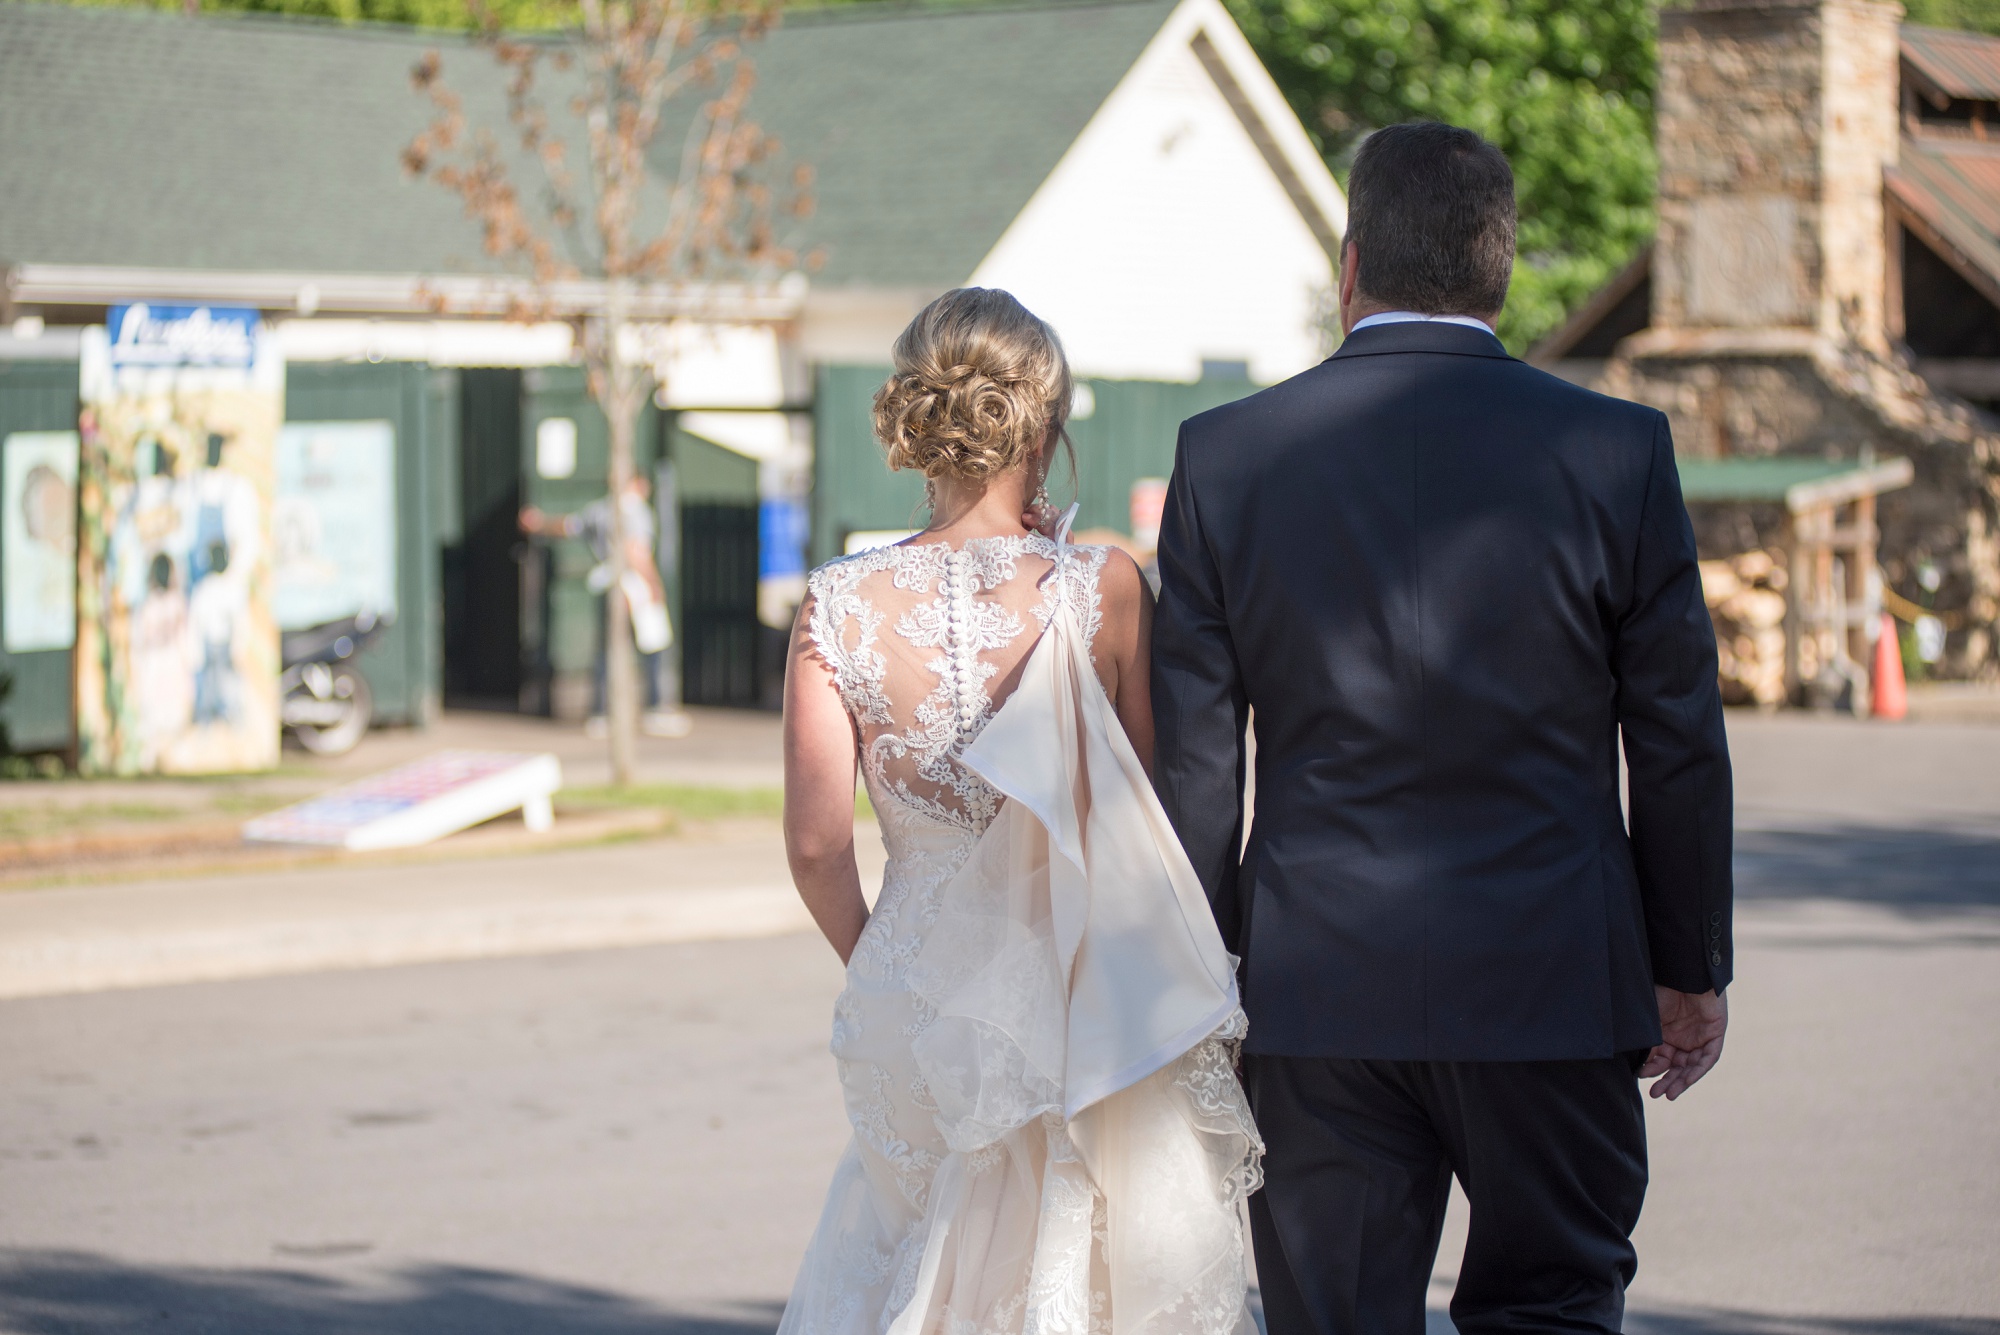 Nashville TN Engagement & Wedding Photographer - IvoryDoorStudio.com - Pat & Mahlia Dooley